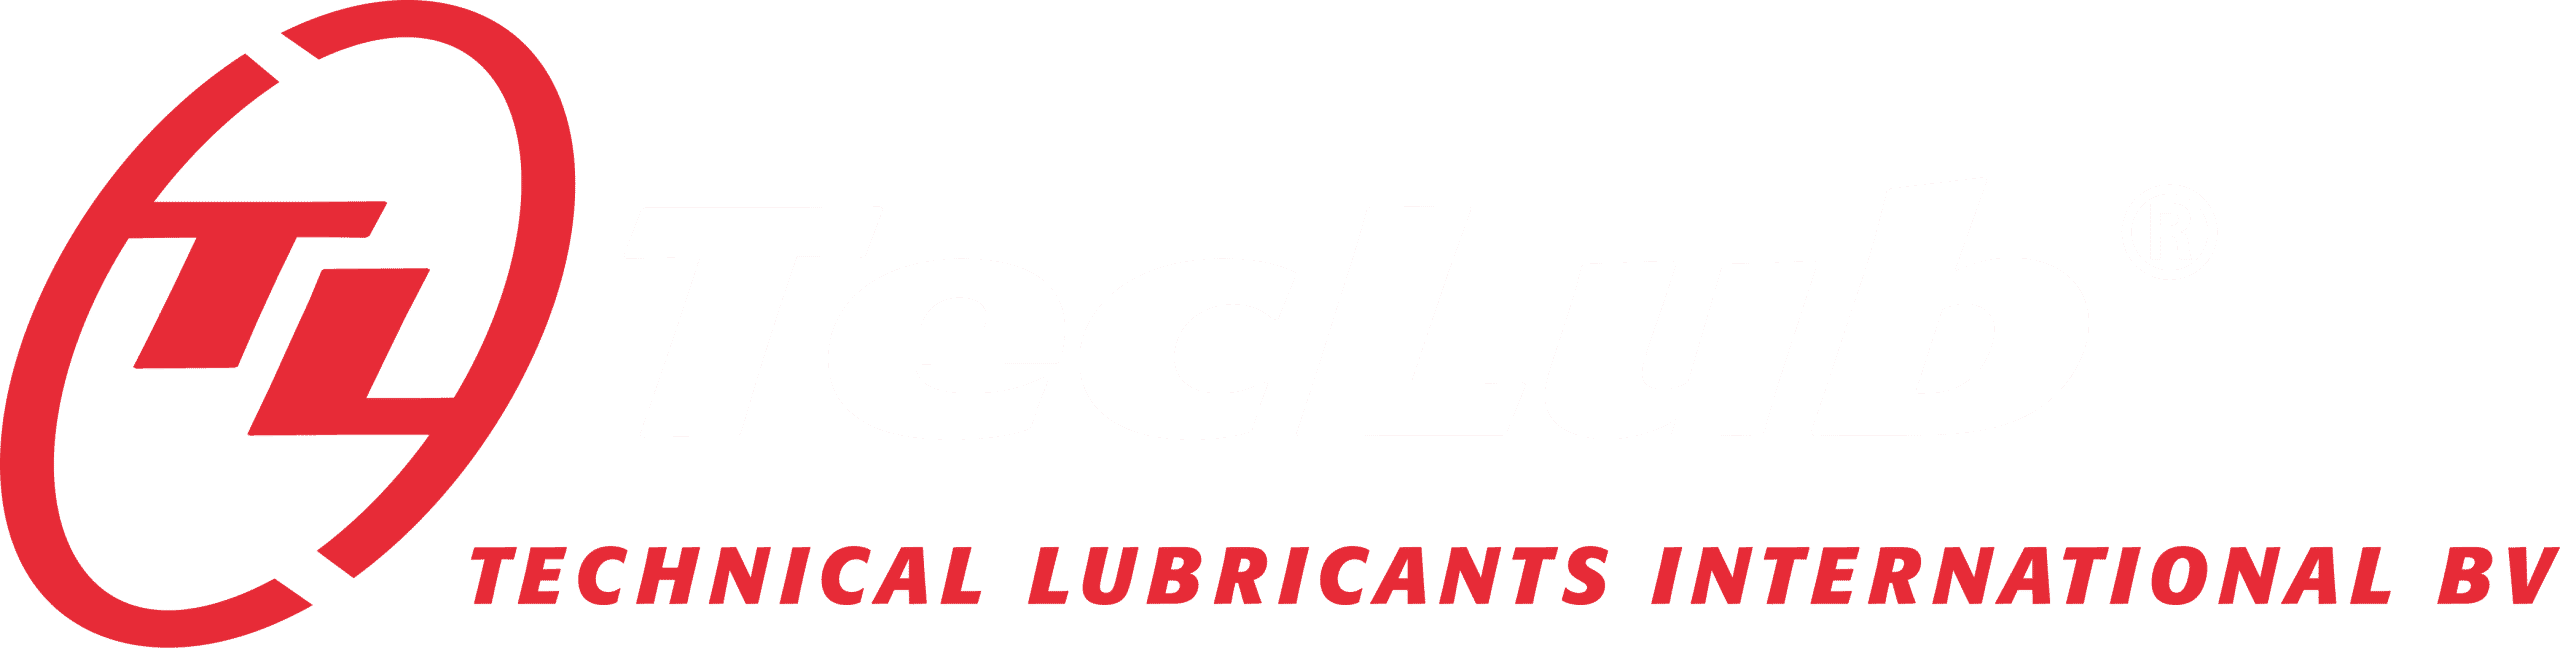 Product Brake Fluid - TecLub | Technical Lubricants International B.V. image